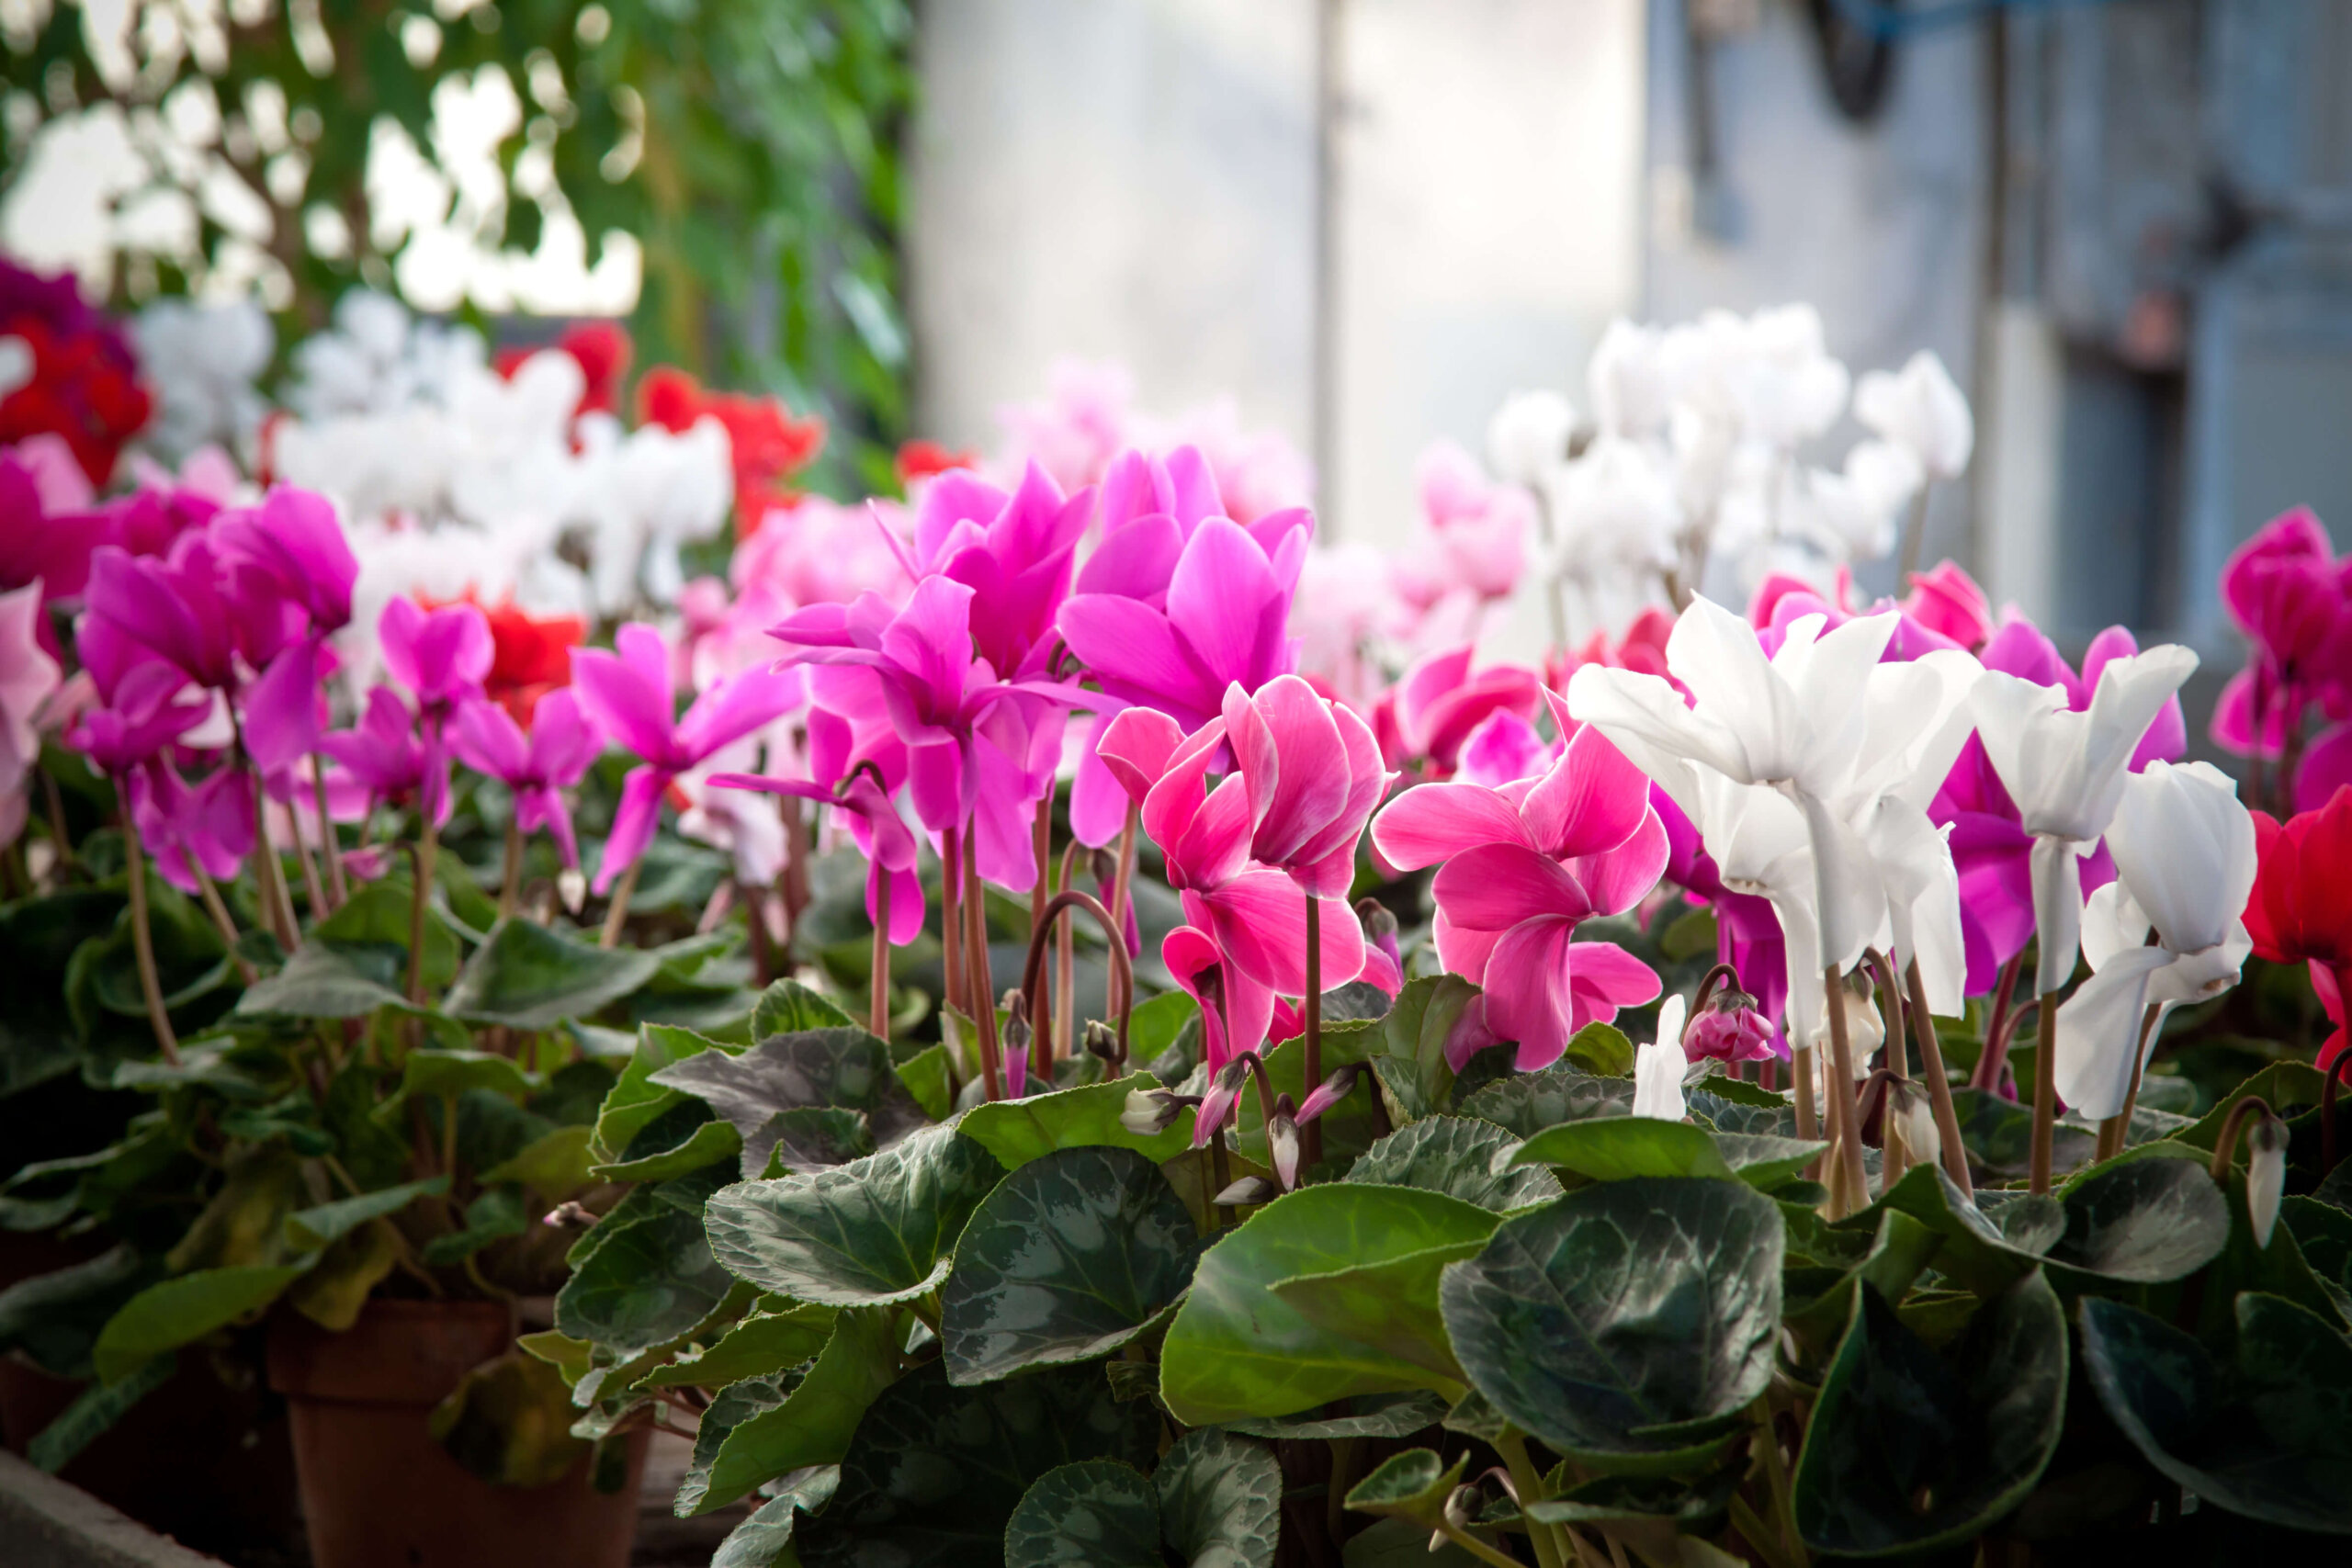 11 Best Types of Flowering Plants for Indoor Planting